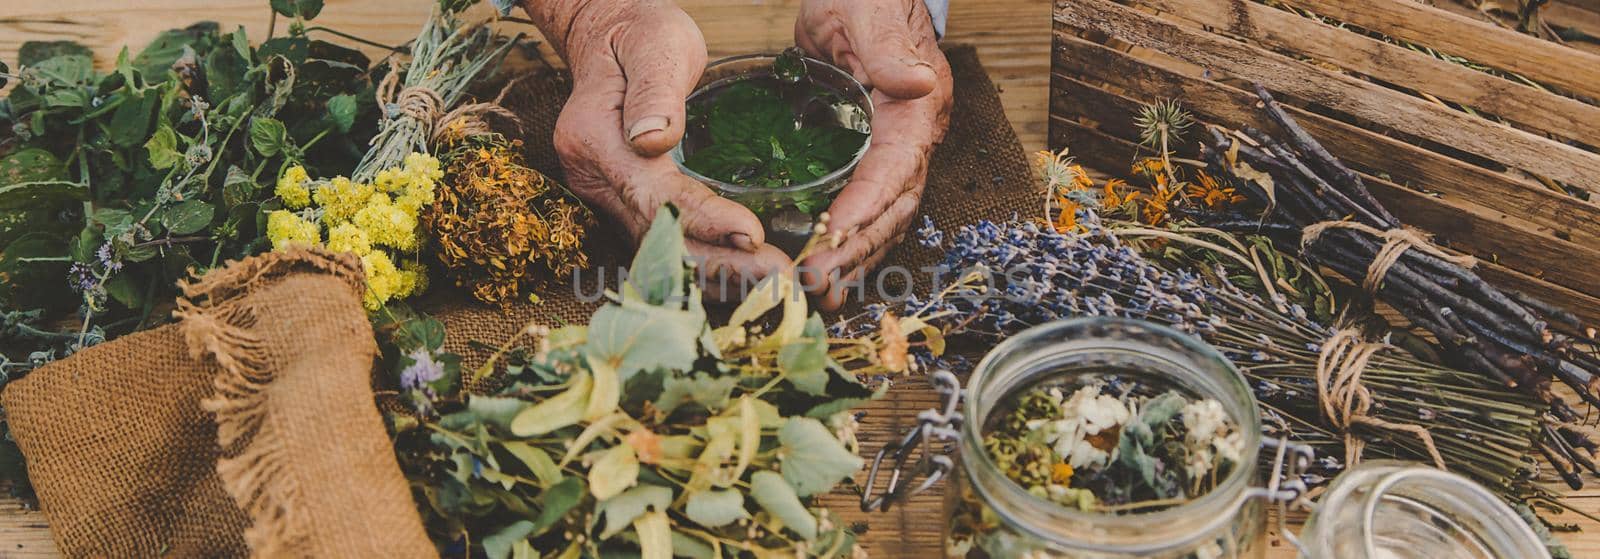 Grandmother makes tea with medicinal herbs. Selective focus. by yanadjana